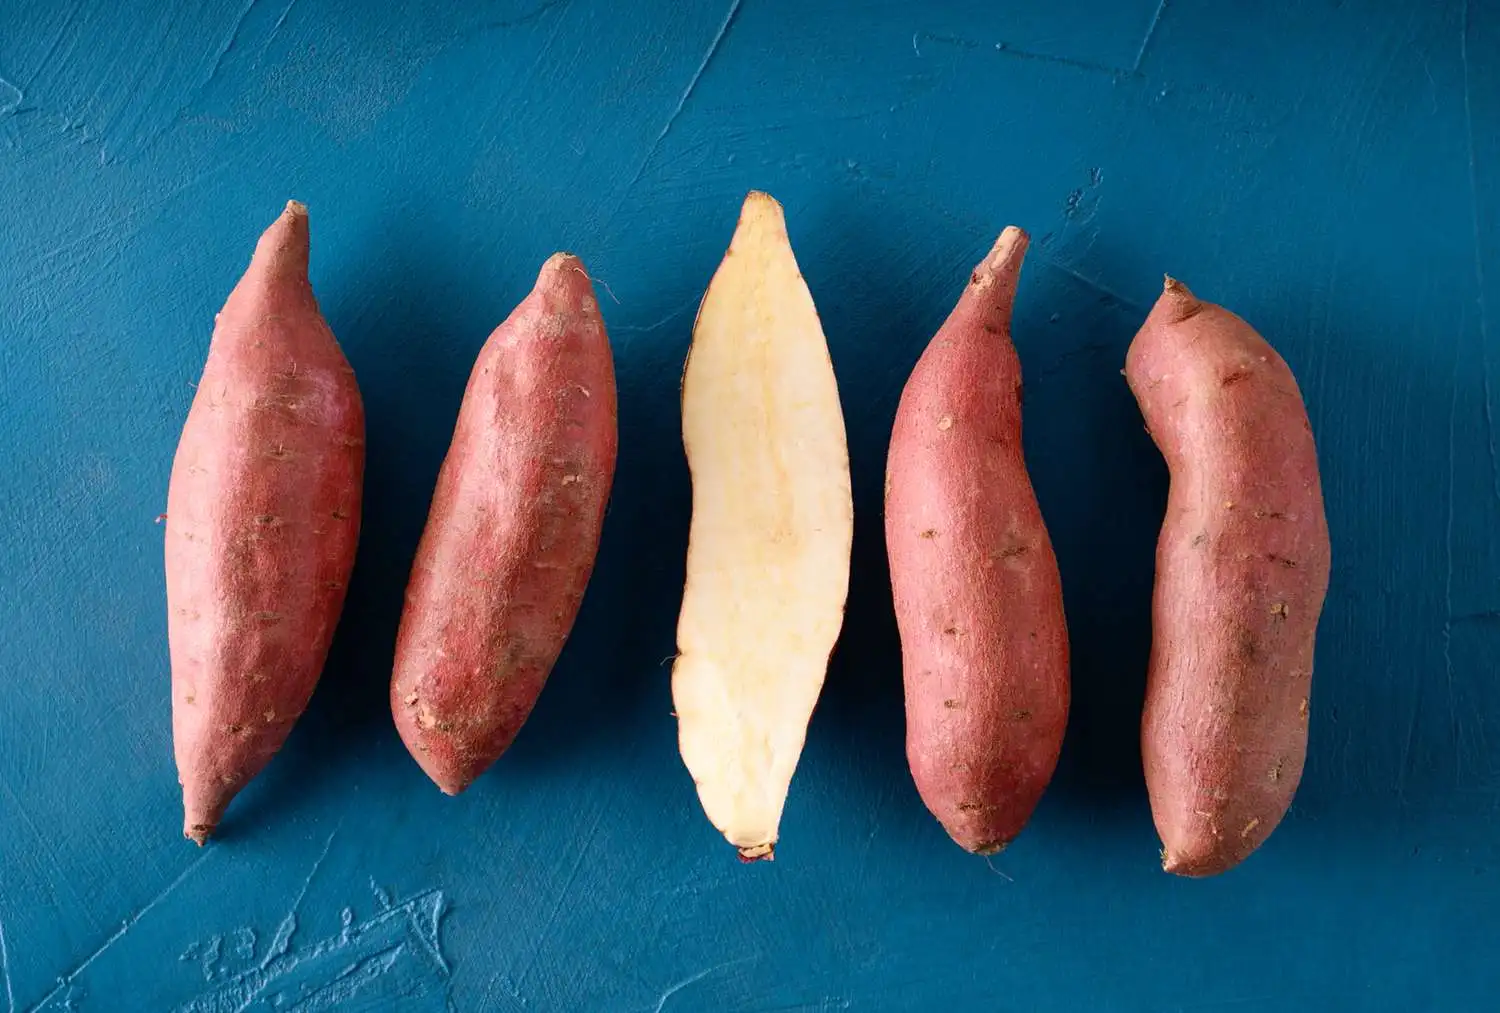 is-sweet-potato-good-for-weight-loss-sehatnagar-com